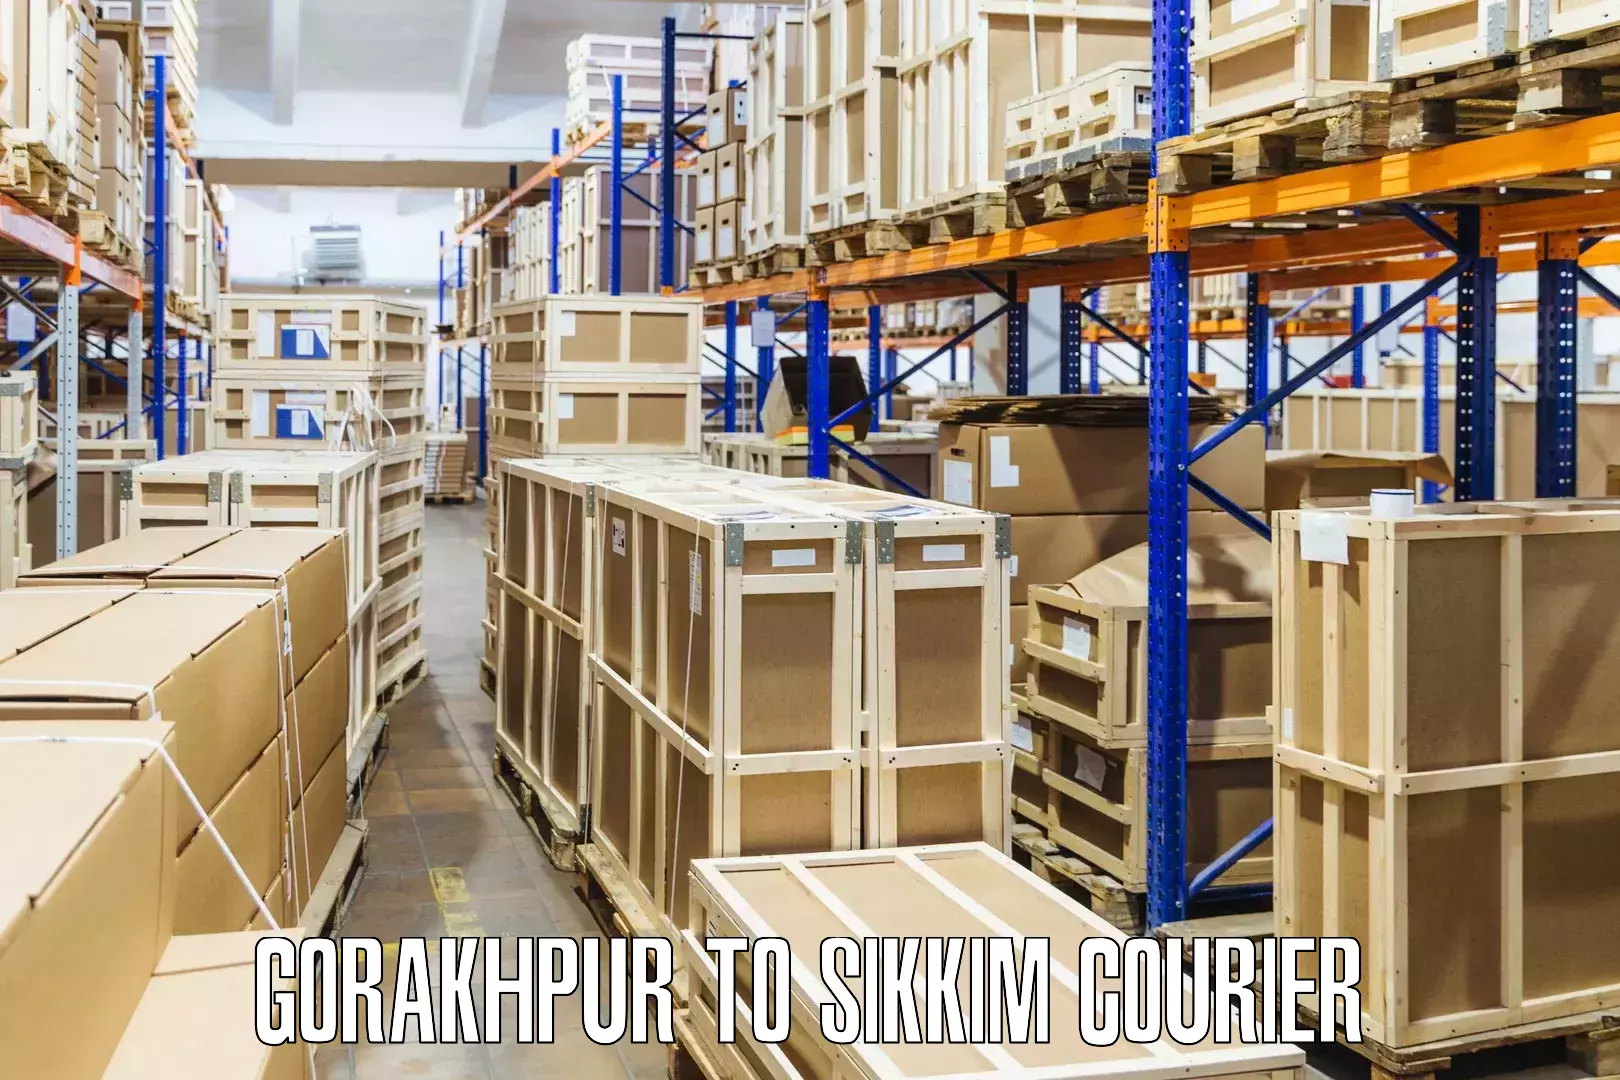 User-friendly delivery service Gorakhpur to Sikkim